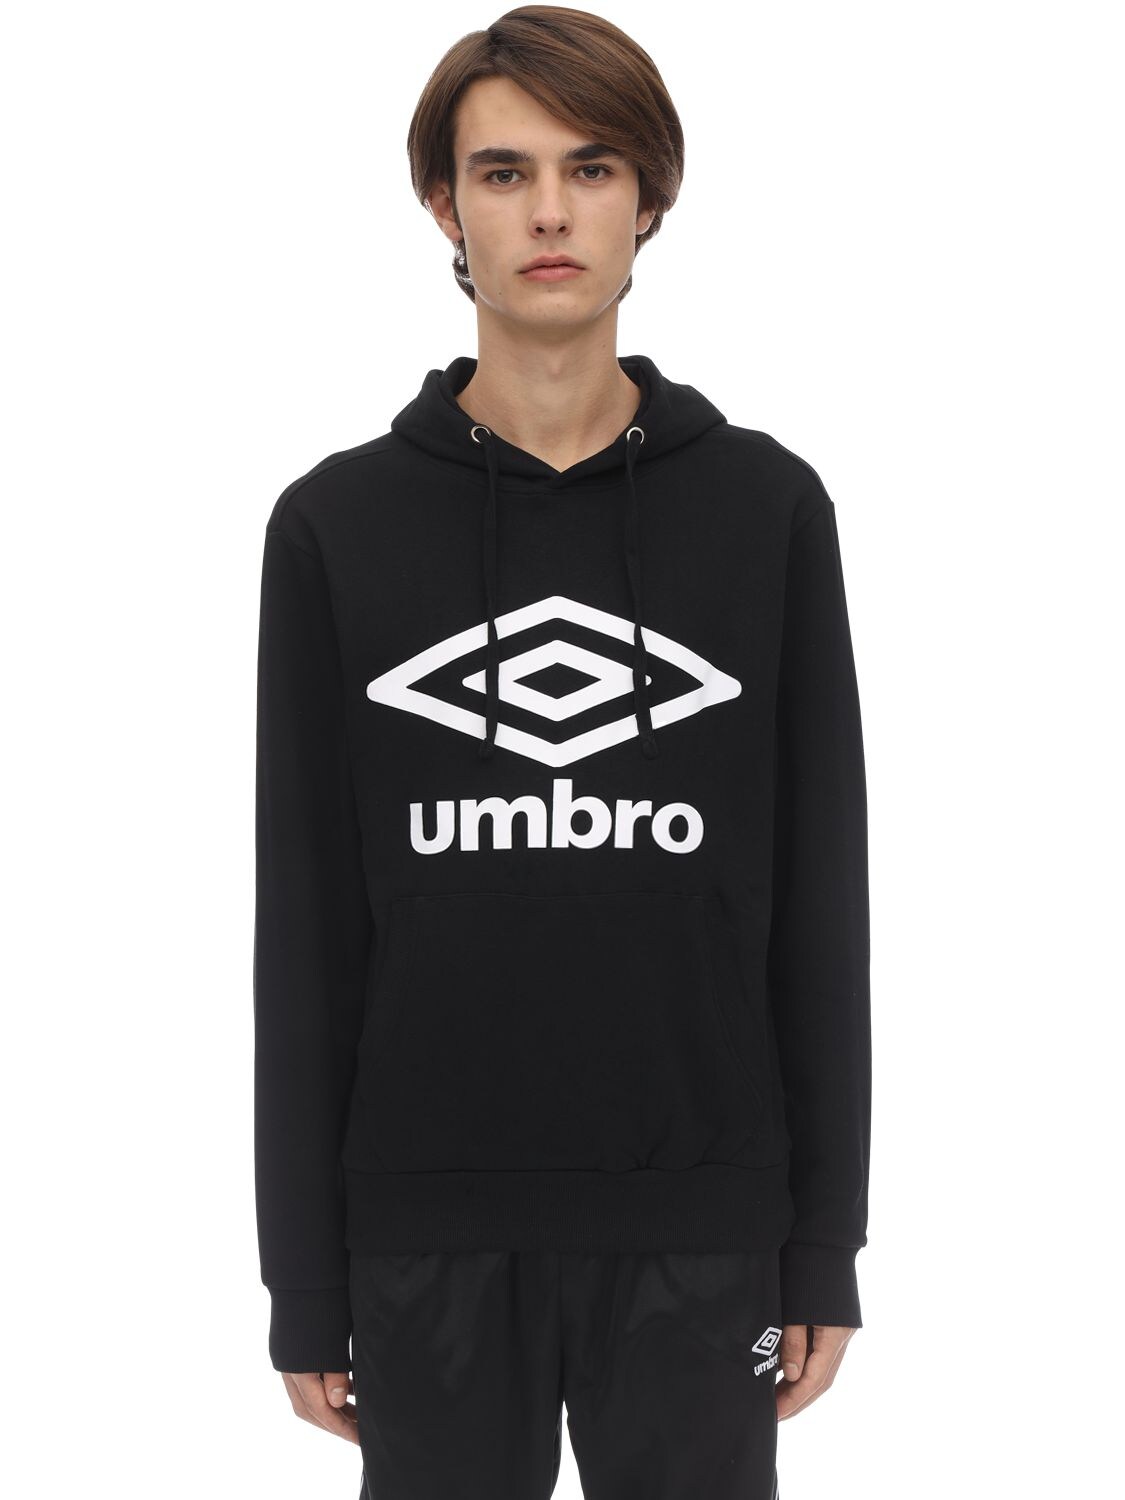 Umbro Logo Cotton Blend Sweatshirt Hoodie In Black